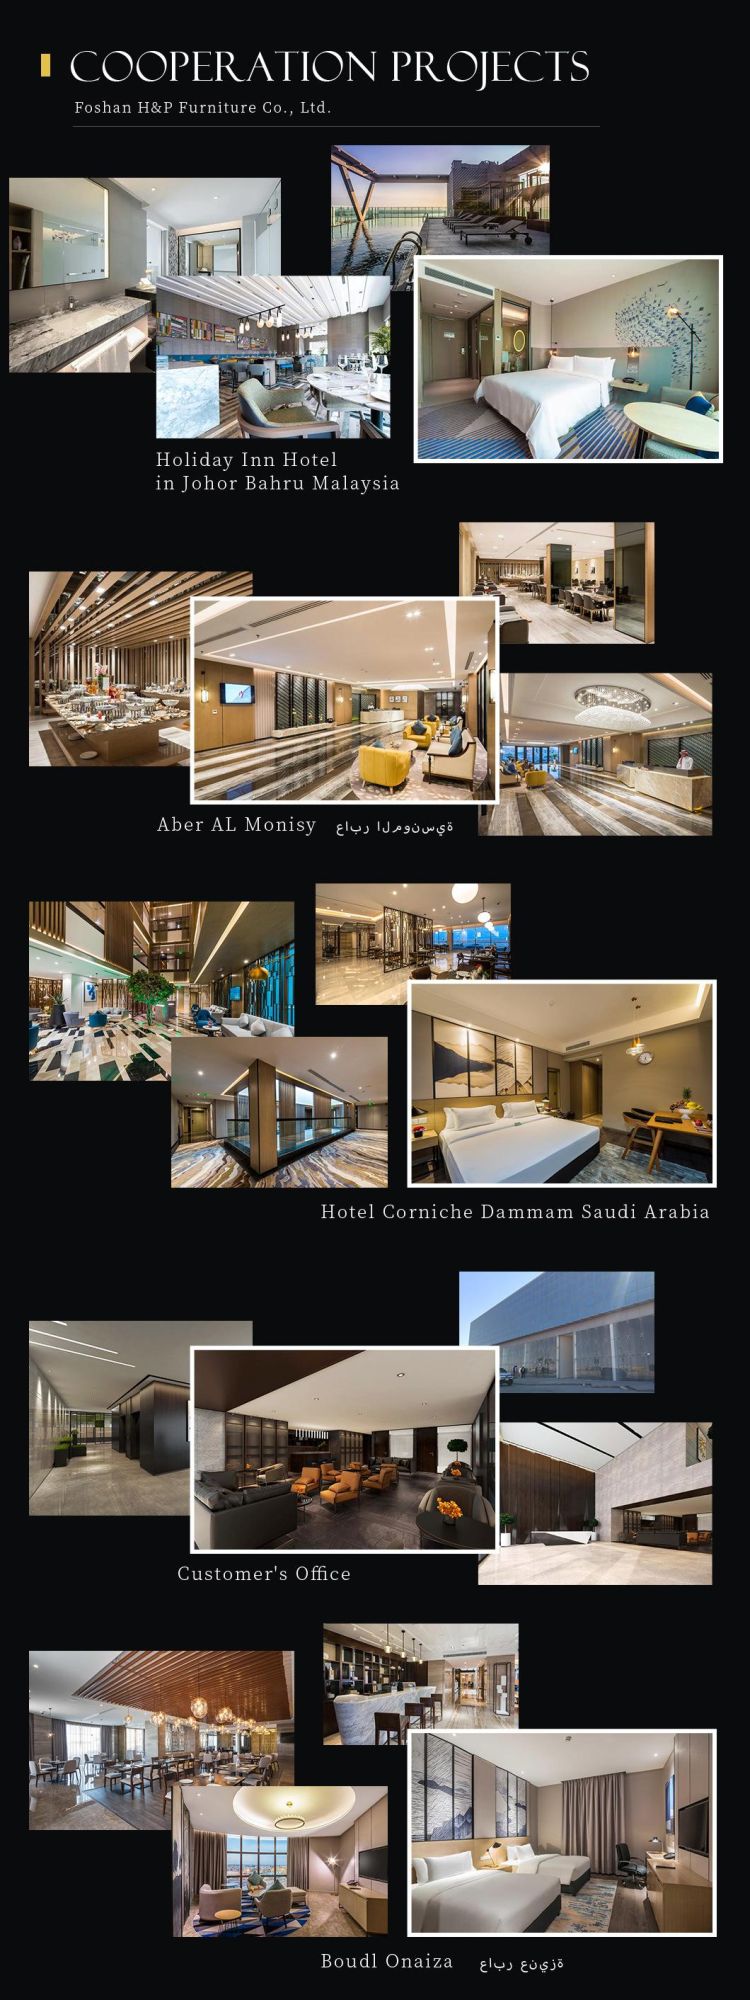 Southeast Asia Hotel Design One Stop Solution 5 Star Hotel Bedroom Furniture Set